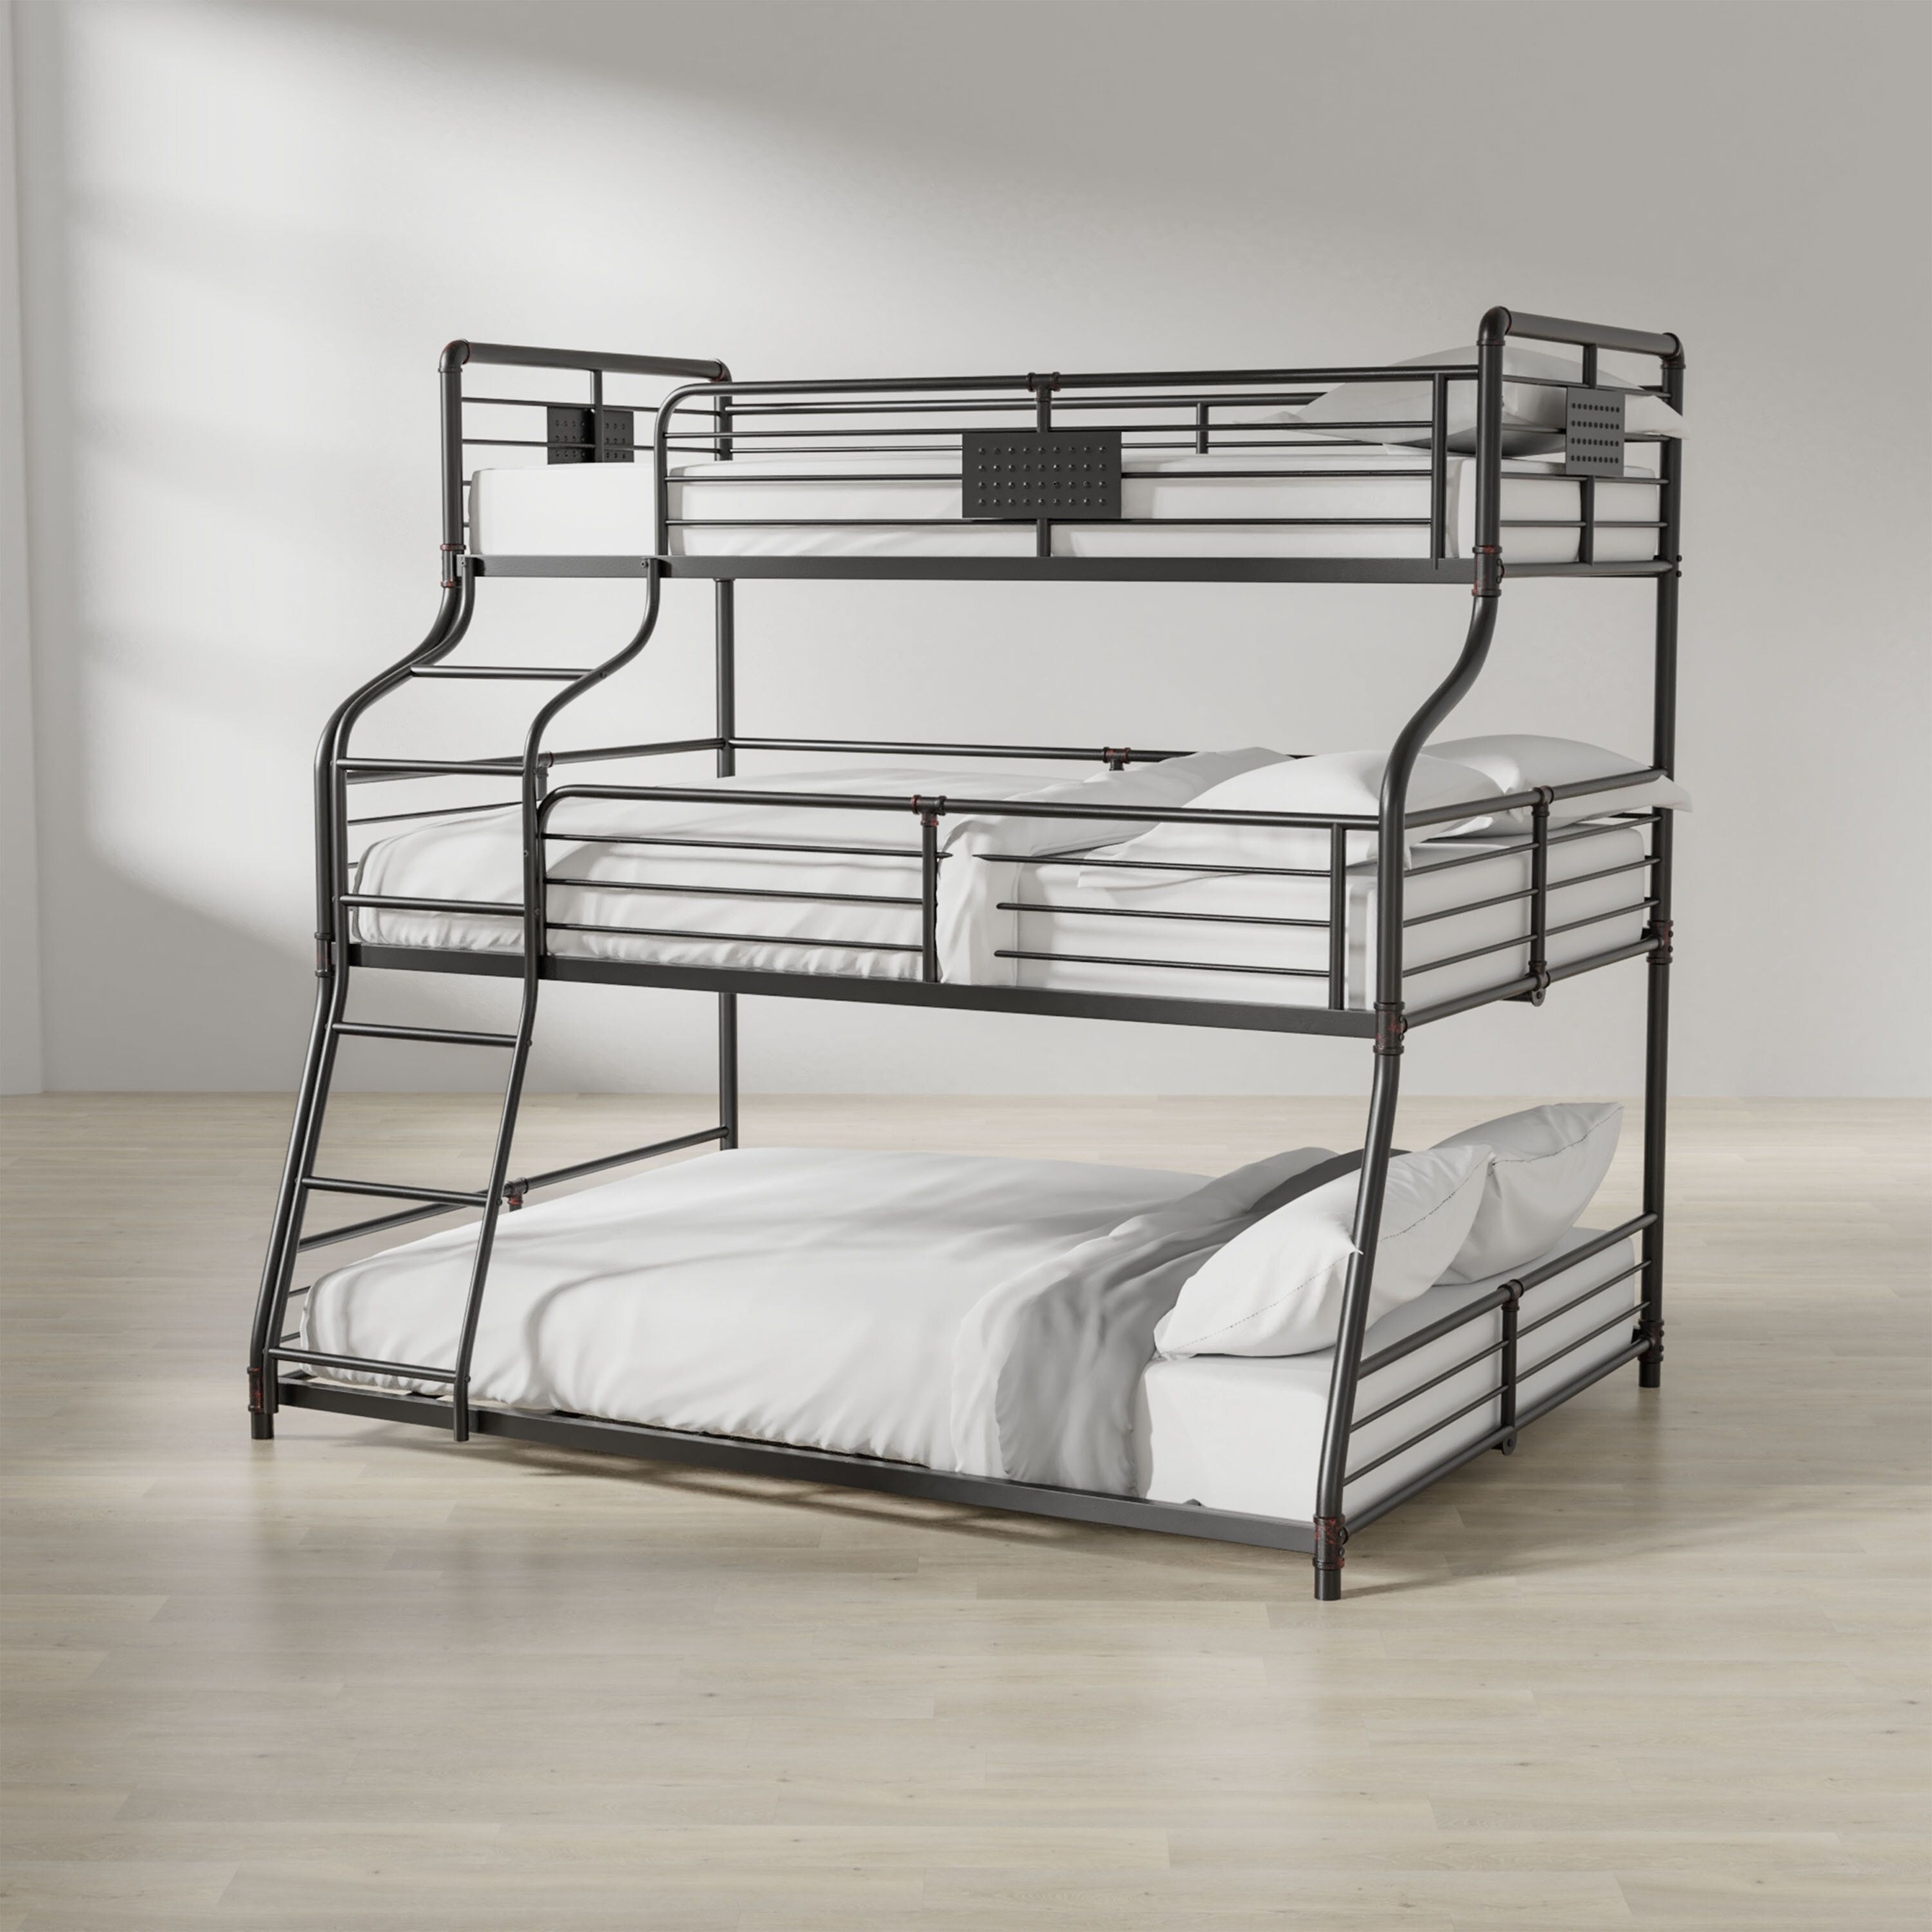 Heavy Duty Bunk Beds Visualhunt, Bunk Bed Double Over Queen